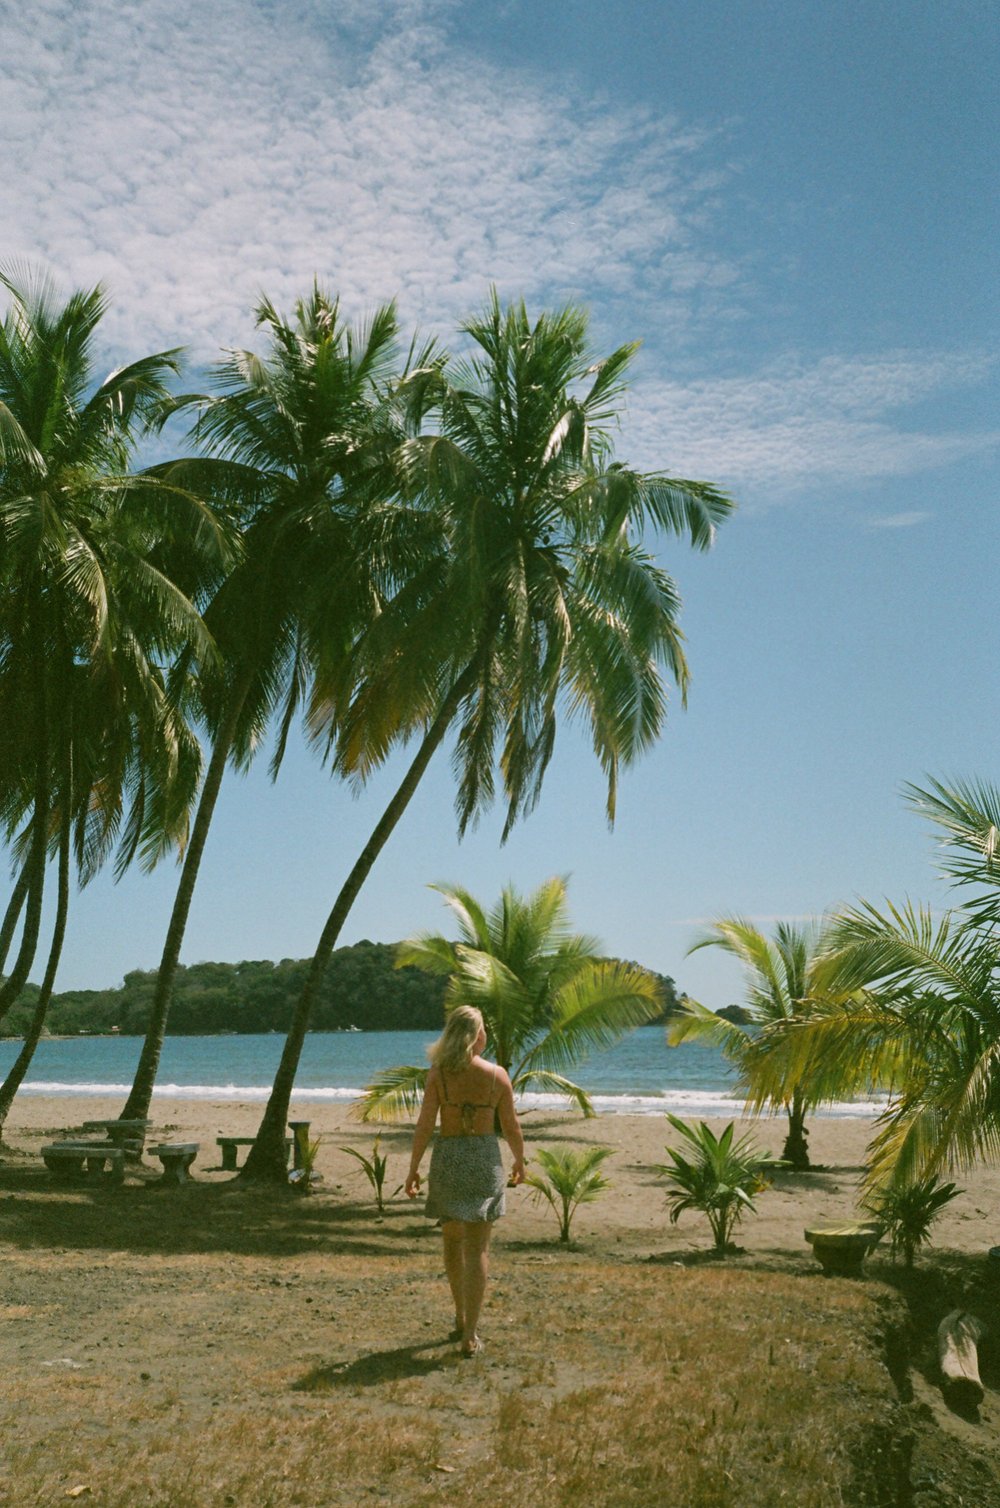 costa-rica-surfing-beach-surf-film-diaries-000975840031.jpg